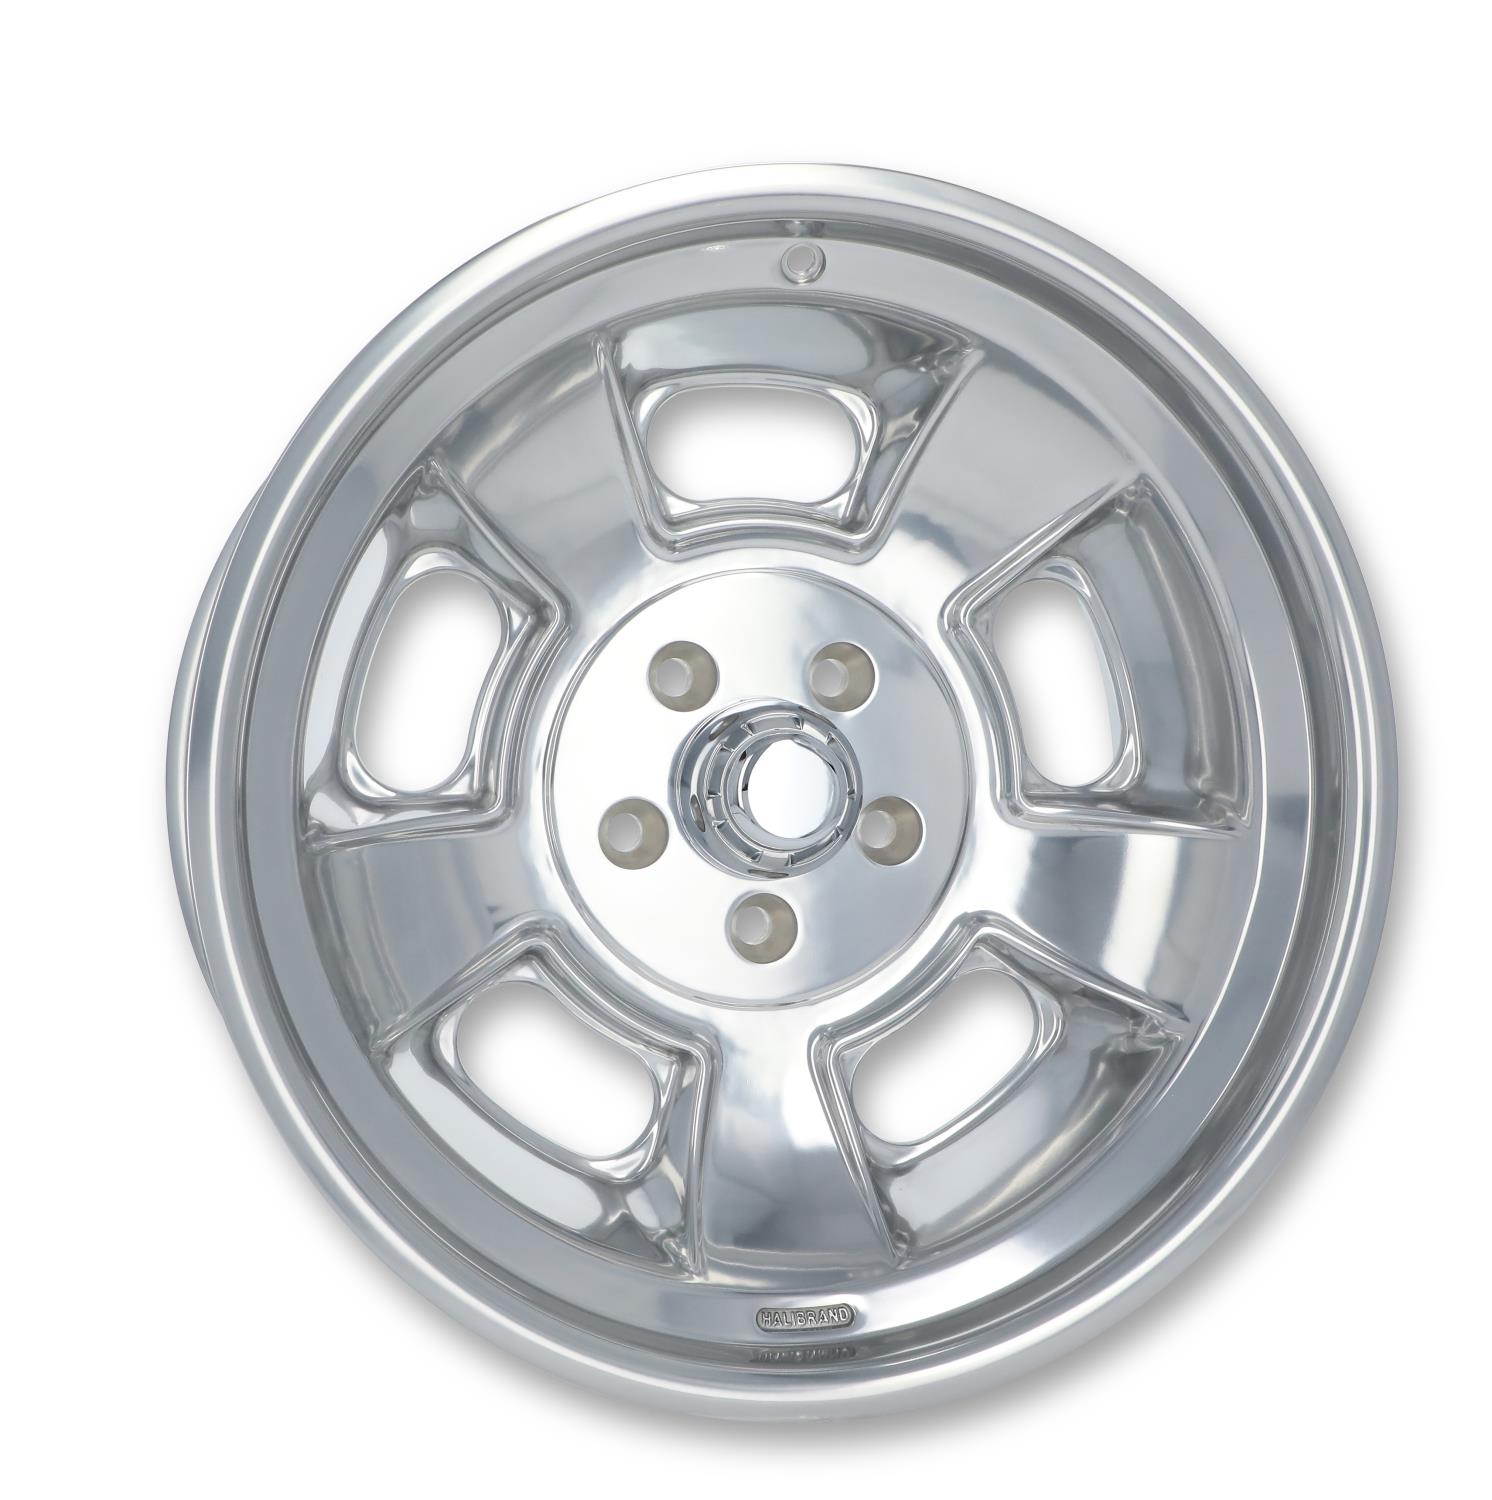 Sprint Rear Wheel, Size: 19x10", Bolt Pattern: 5x5", Backspace: 5.5" [Polished - Gloss Clearcoat]